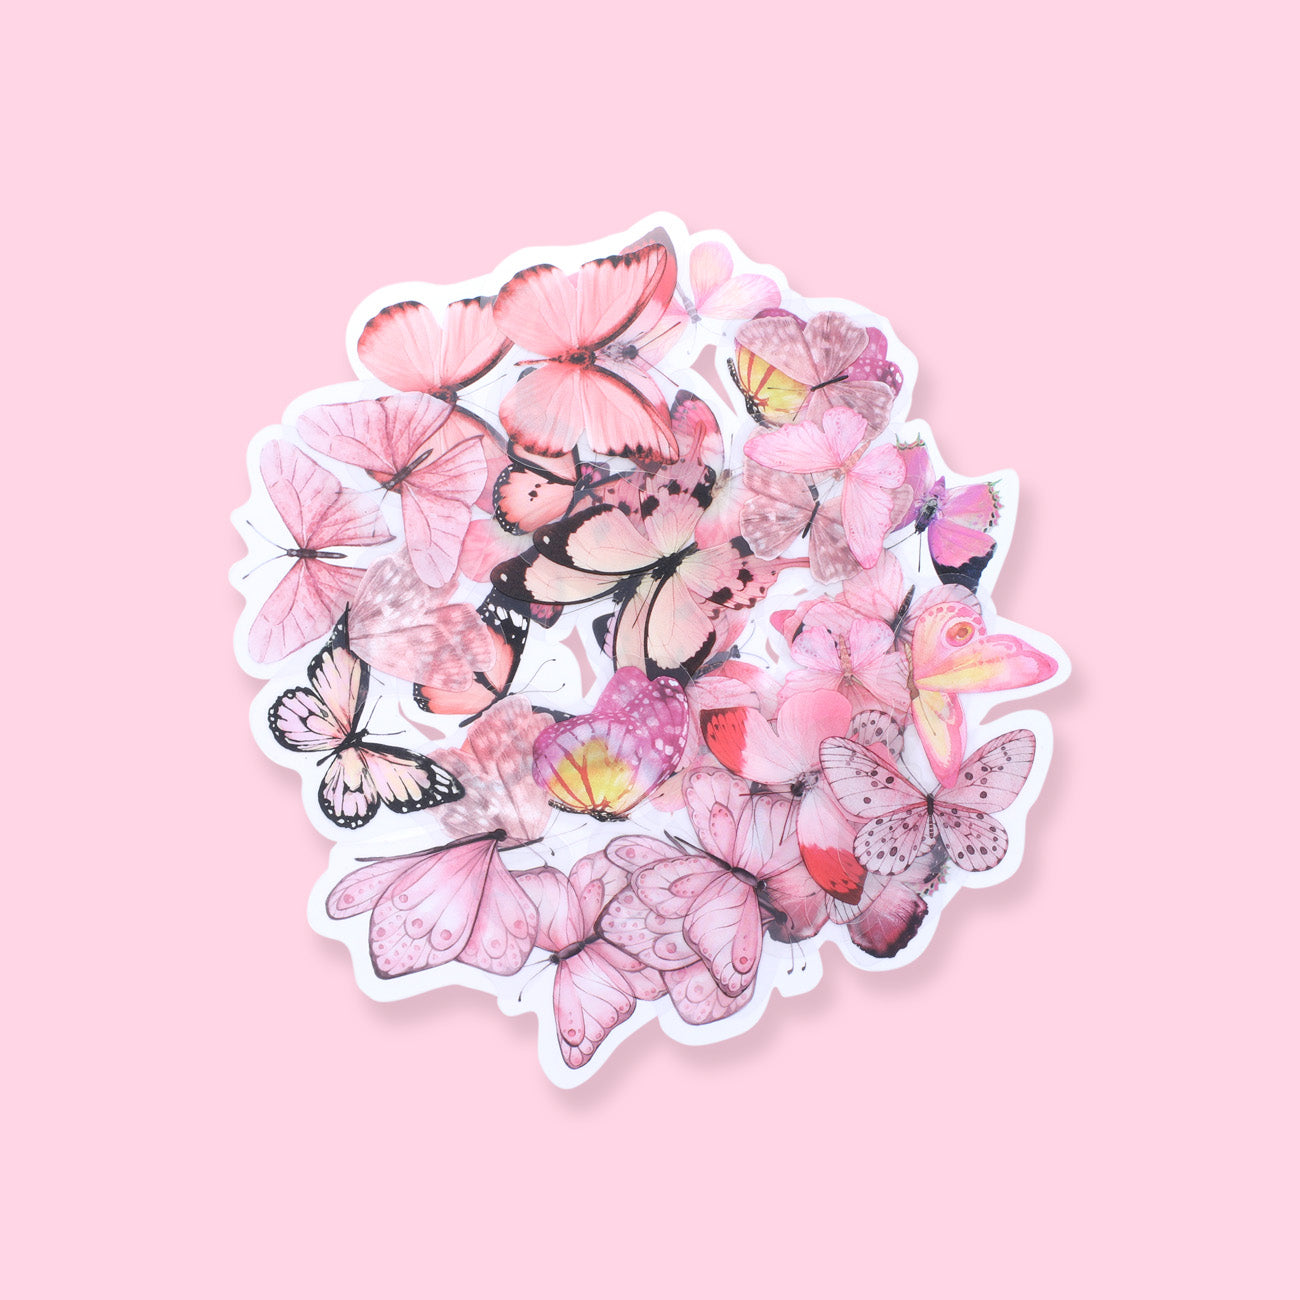 Butterfly Sticker Pack - Pink - Stationery Pal